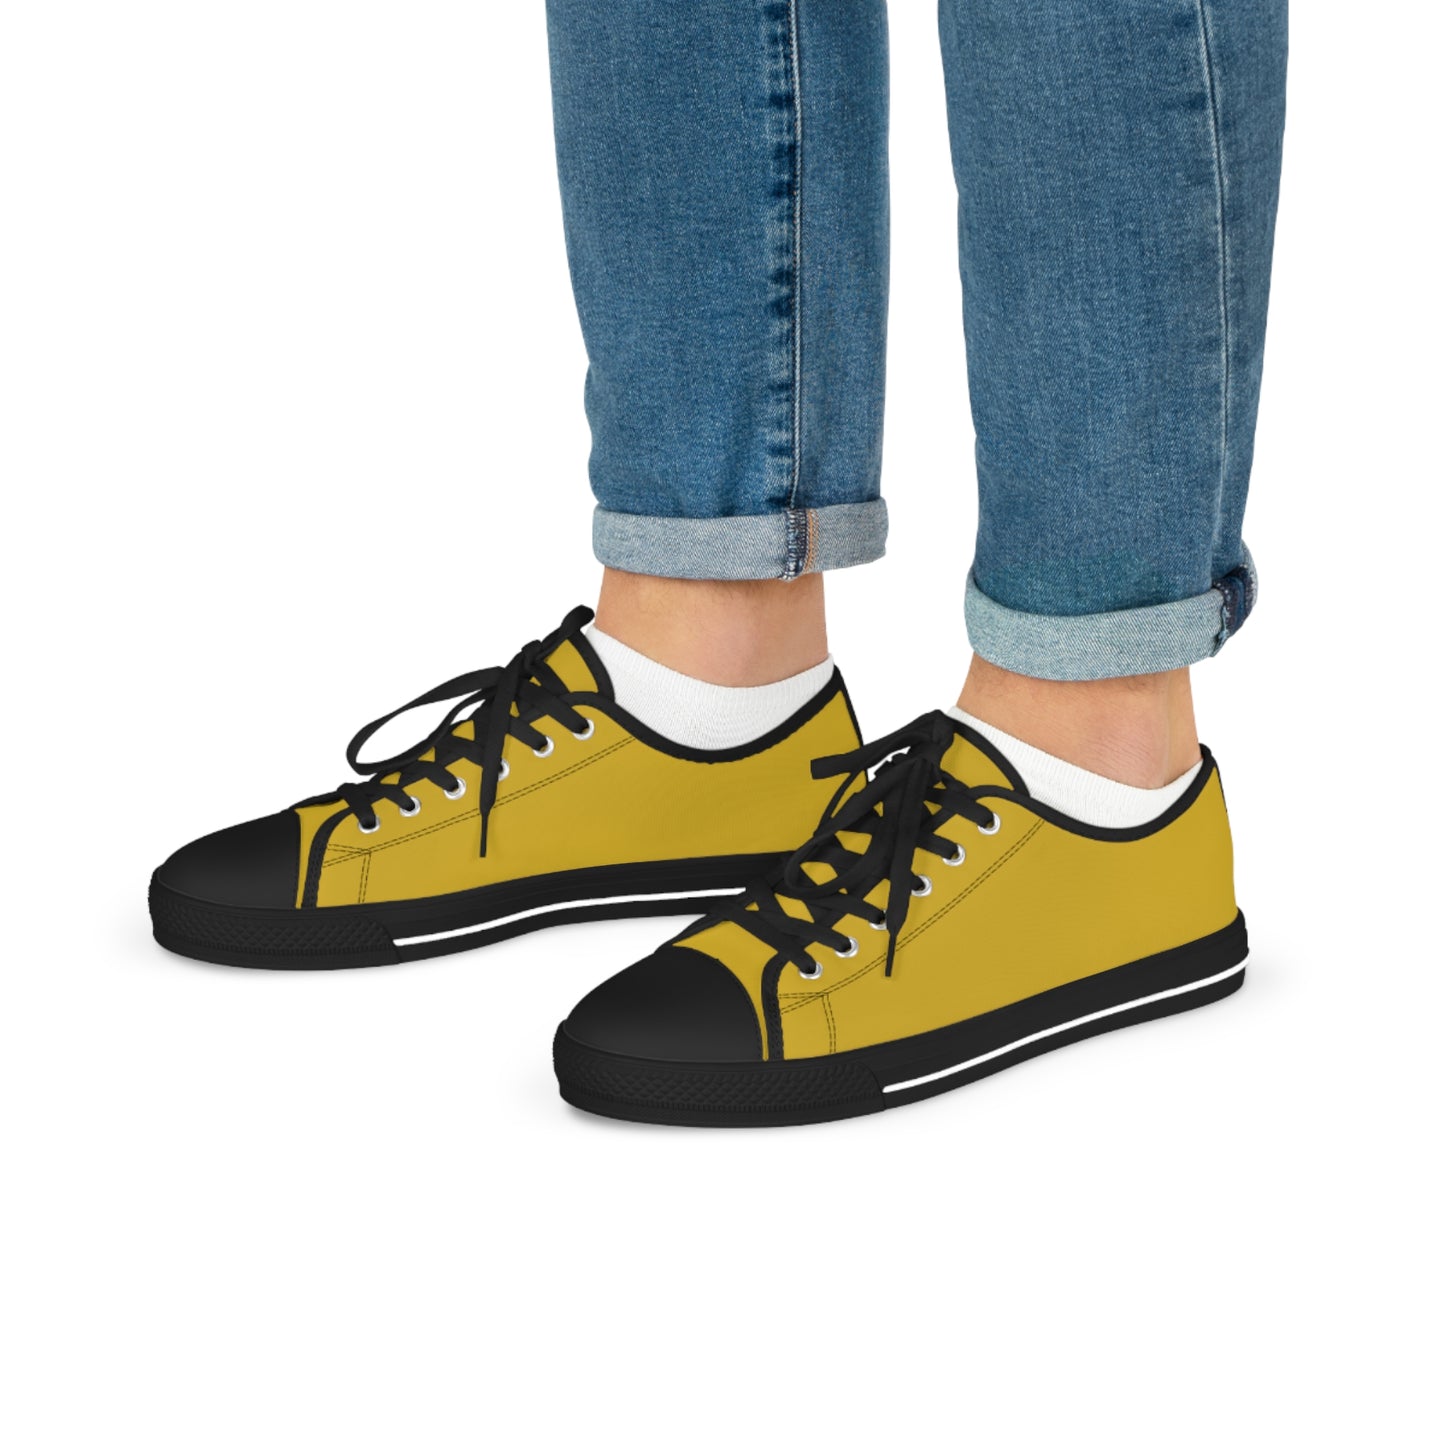 Men's Low Top Sneakers - Gold US 14 Black sole